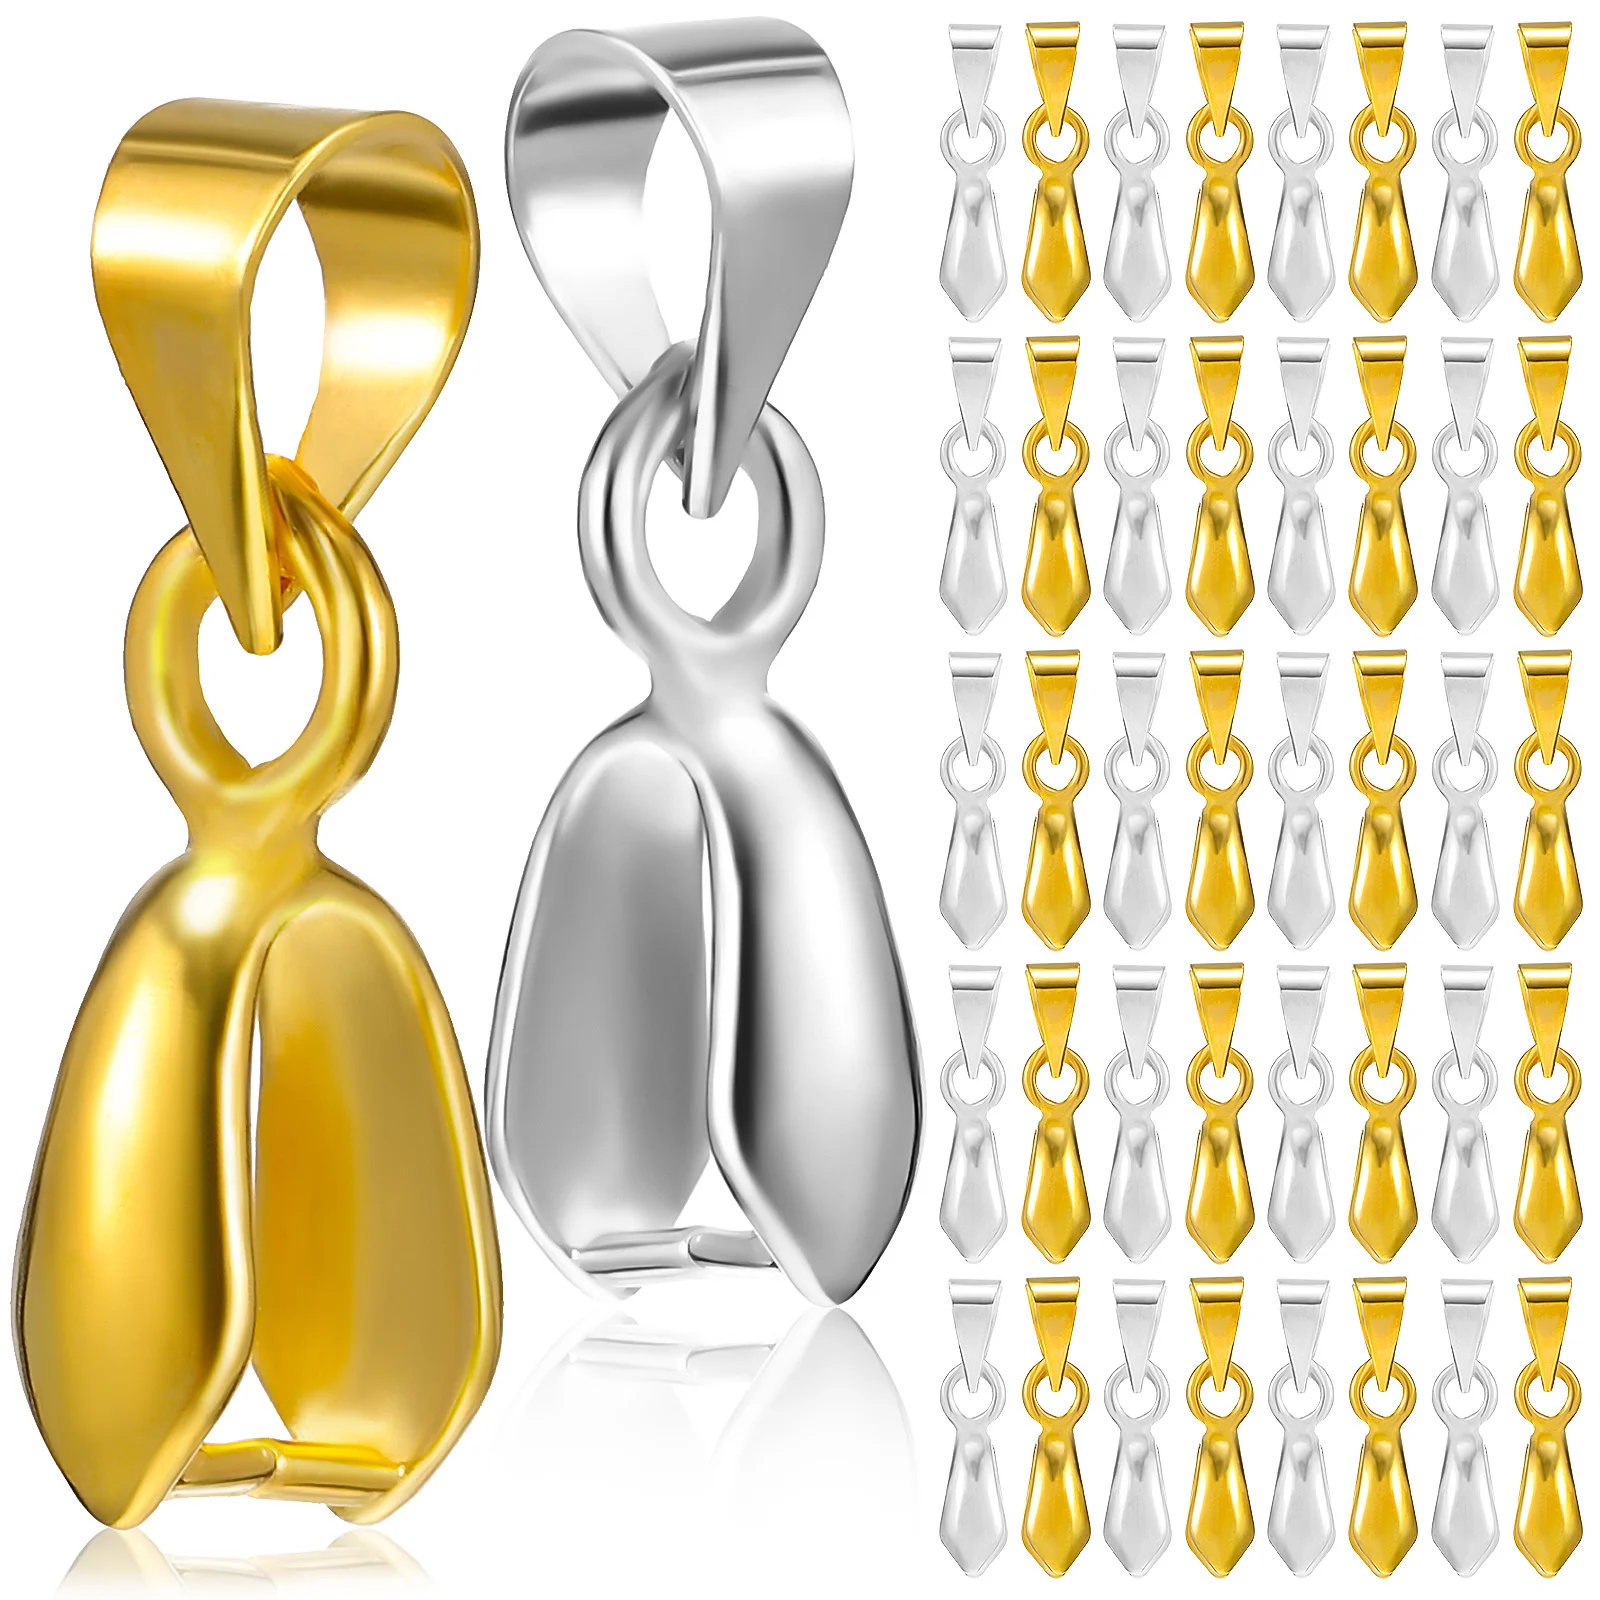 

100 Pcs Gold Locket Pinch Bails for Pendant Clasp Connector Jewelry Clasps Buckle Alloy Connectors Pendants Making Bracelets